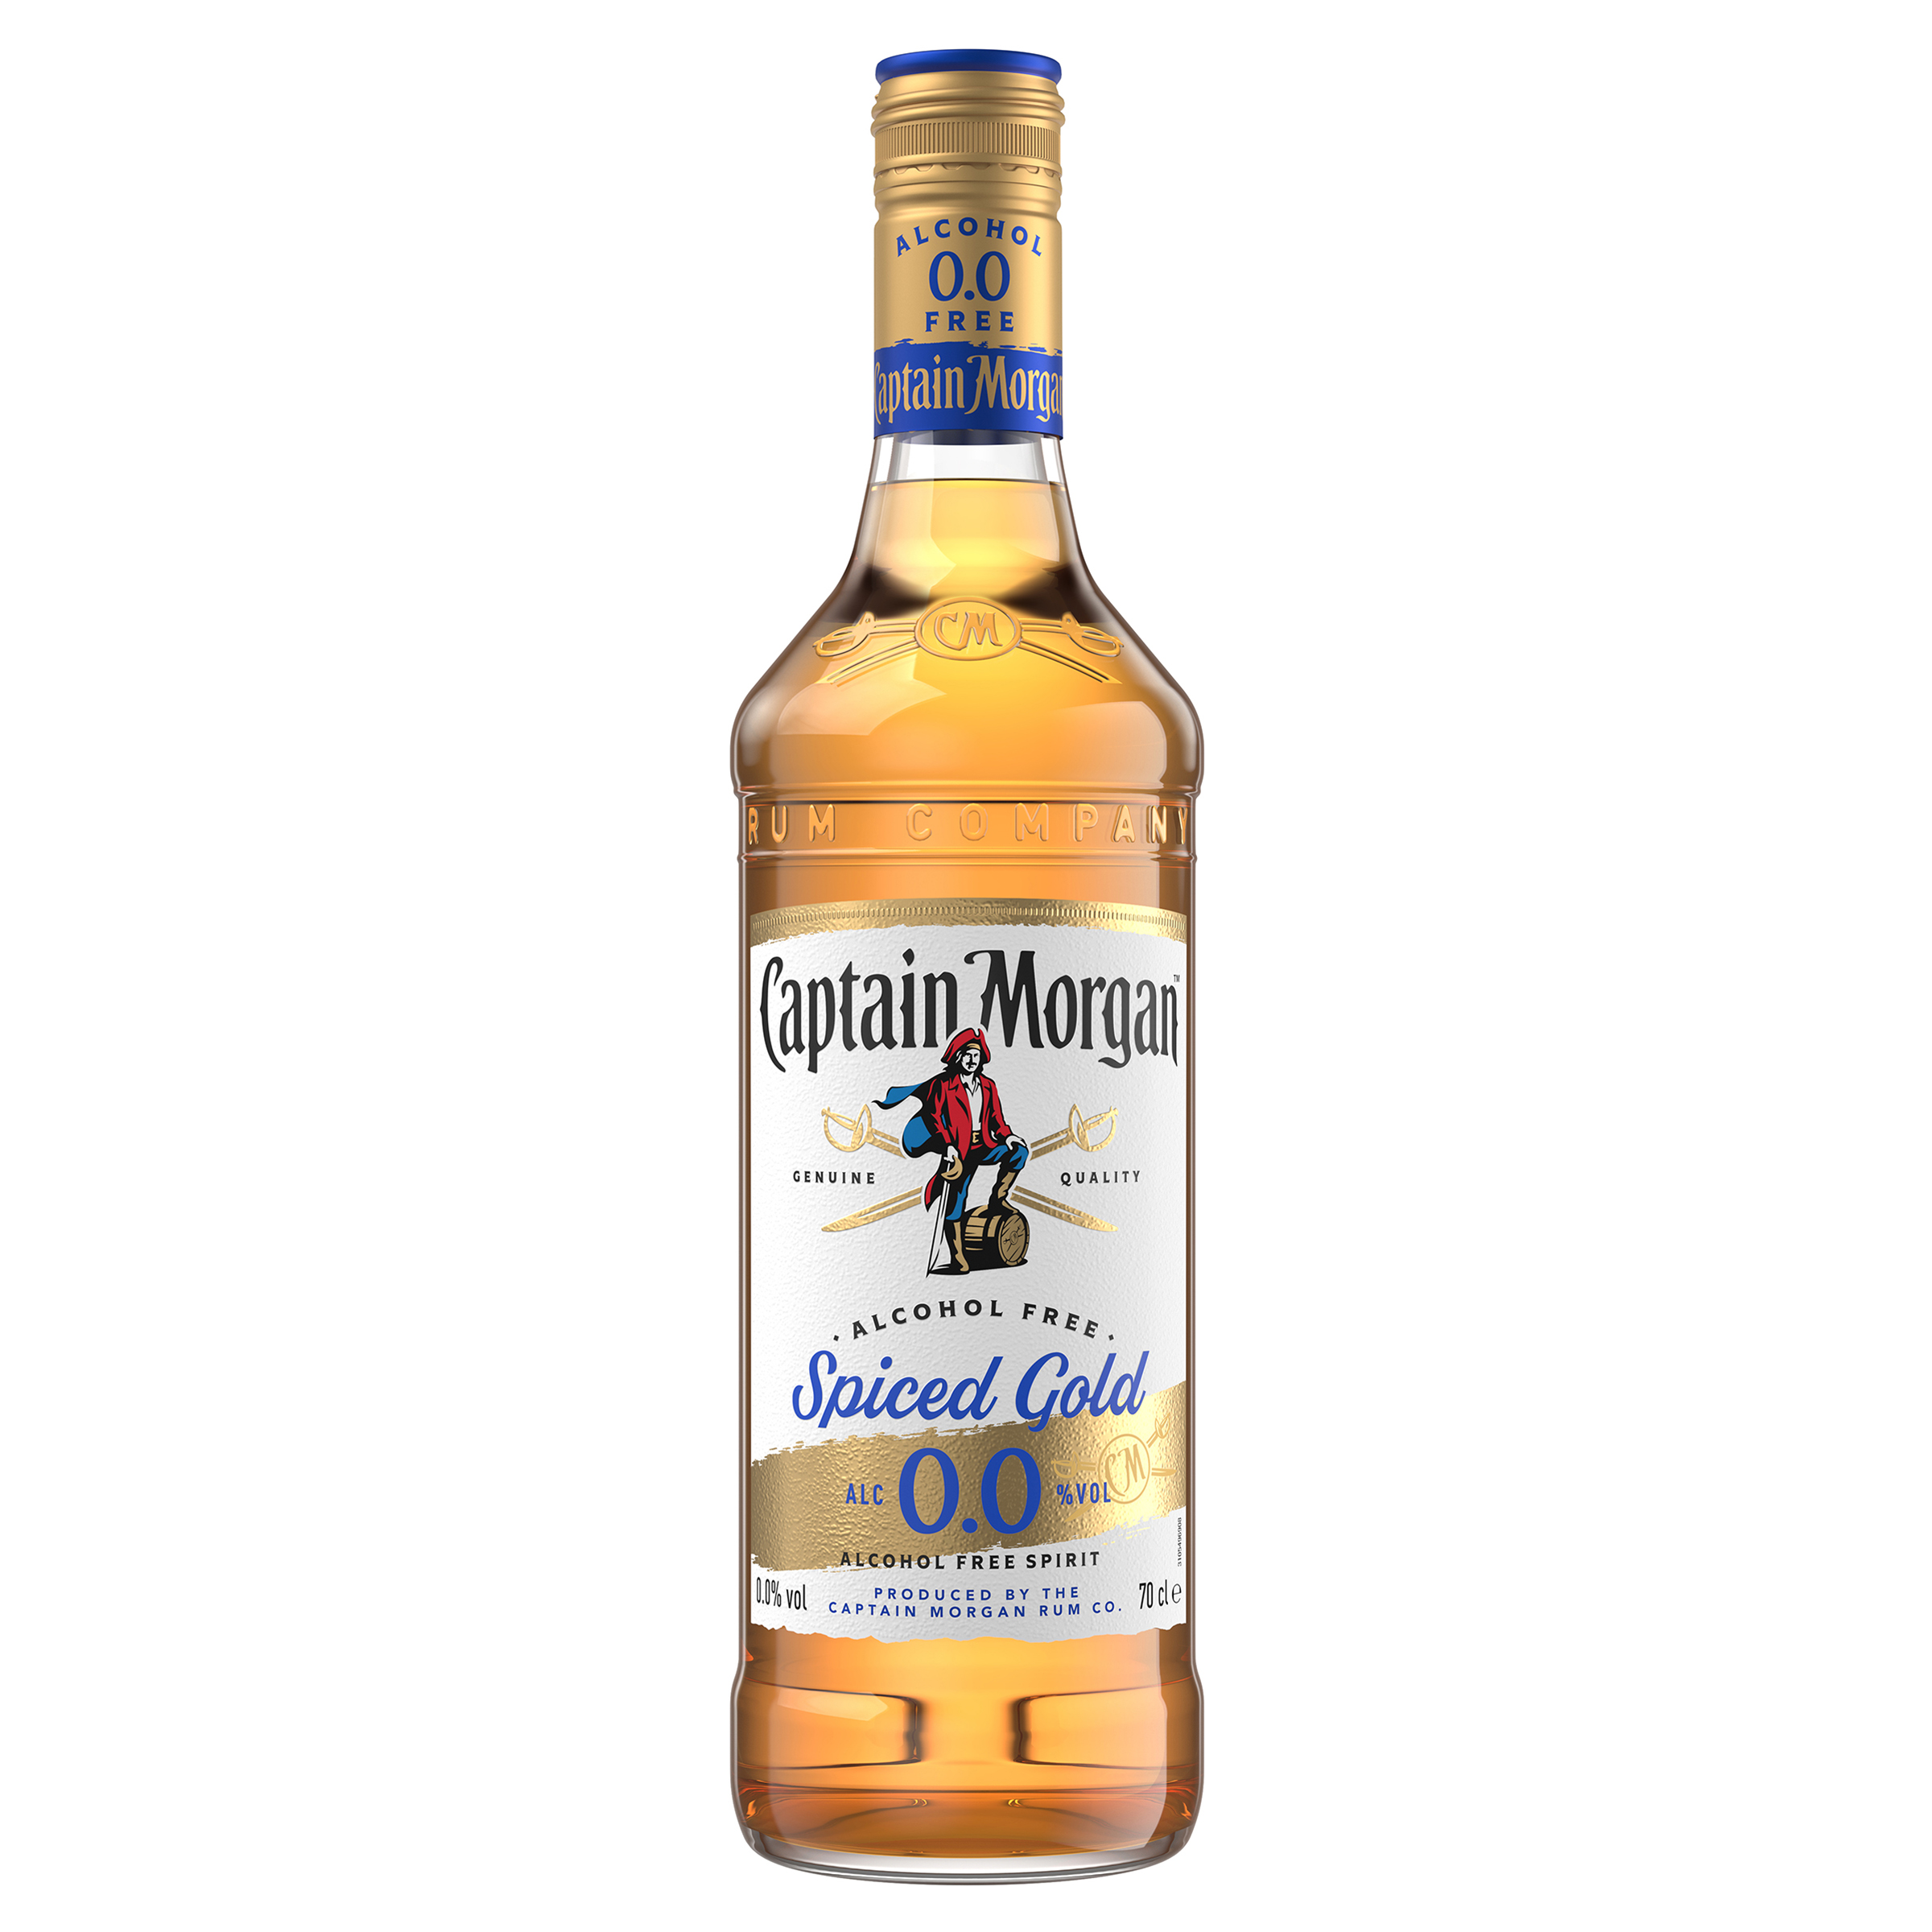 Bar Free | Alcohol Gold Morgan 70cl 0.0 The Spiced Spirit, Captain